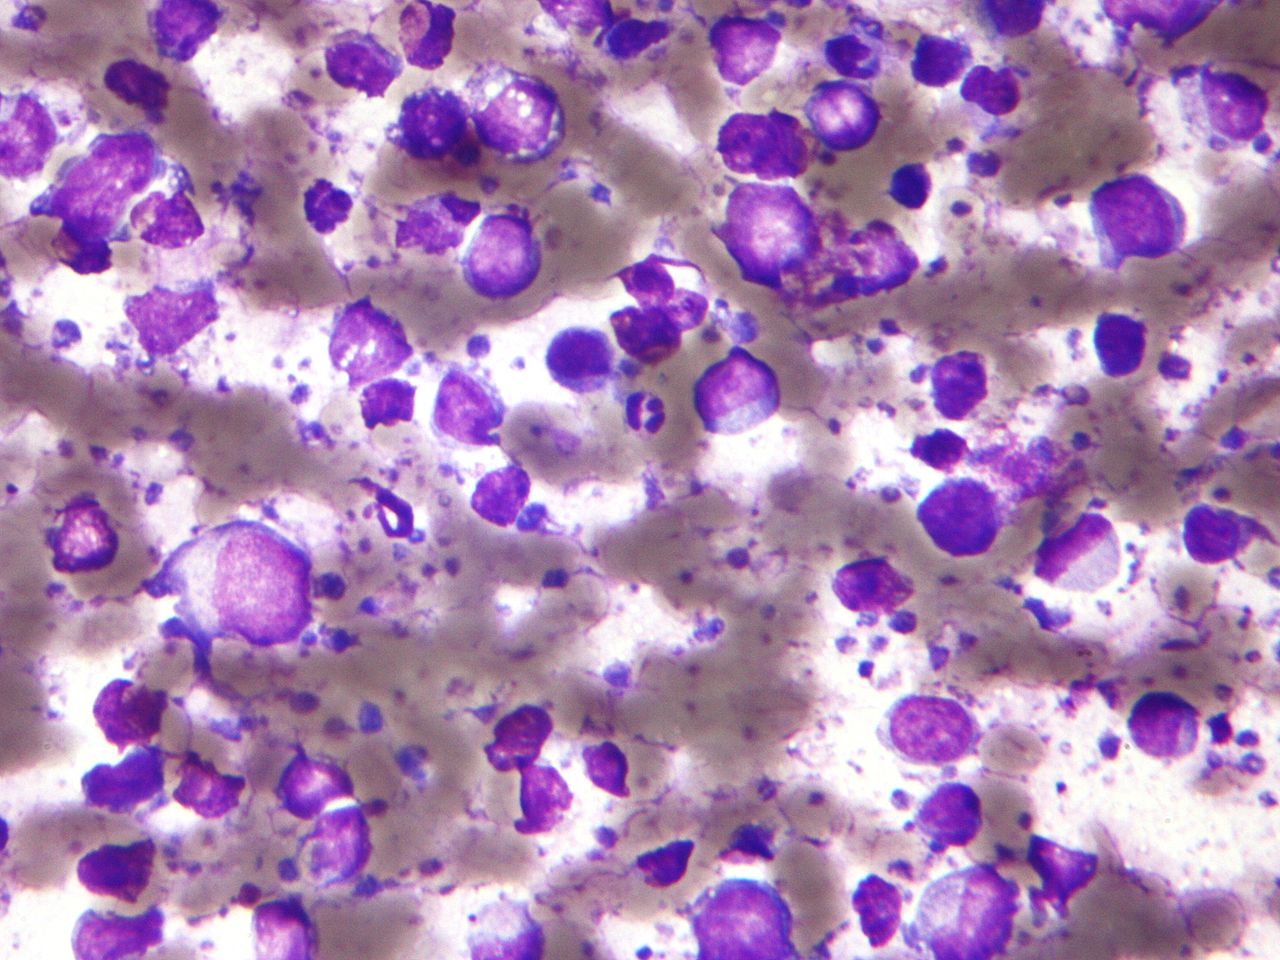 Micrograph of a large B-cell lymphoma.
